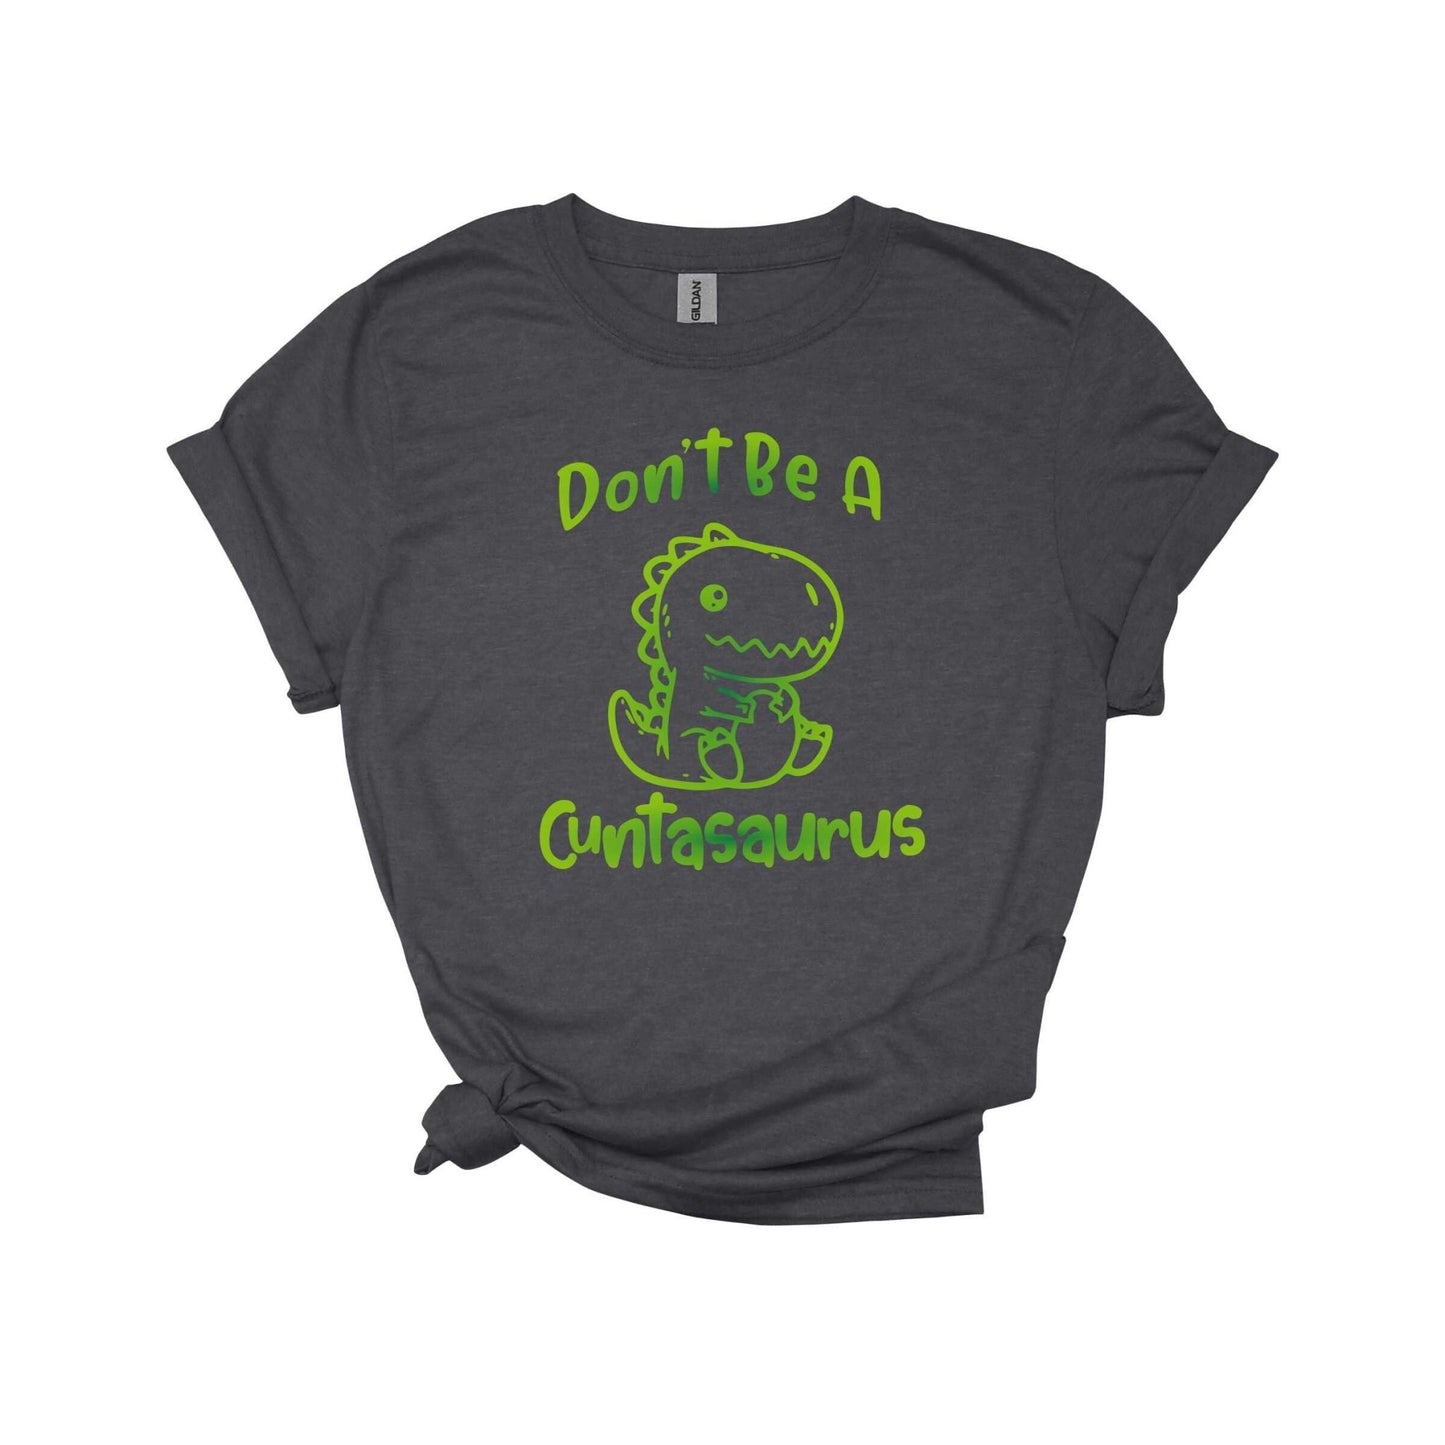 Don't be a cuntasaurus T Shirt, bitchy, asshole, inappropriate adult humor, cute dinosaur woman power pms shirt - SBS T Shop